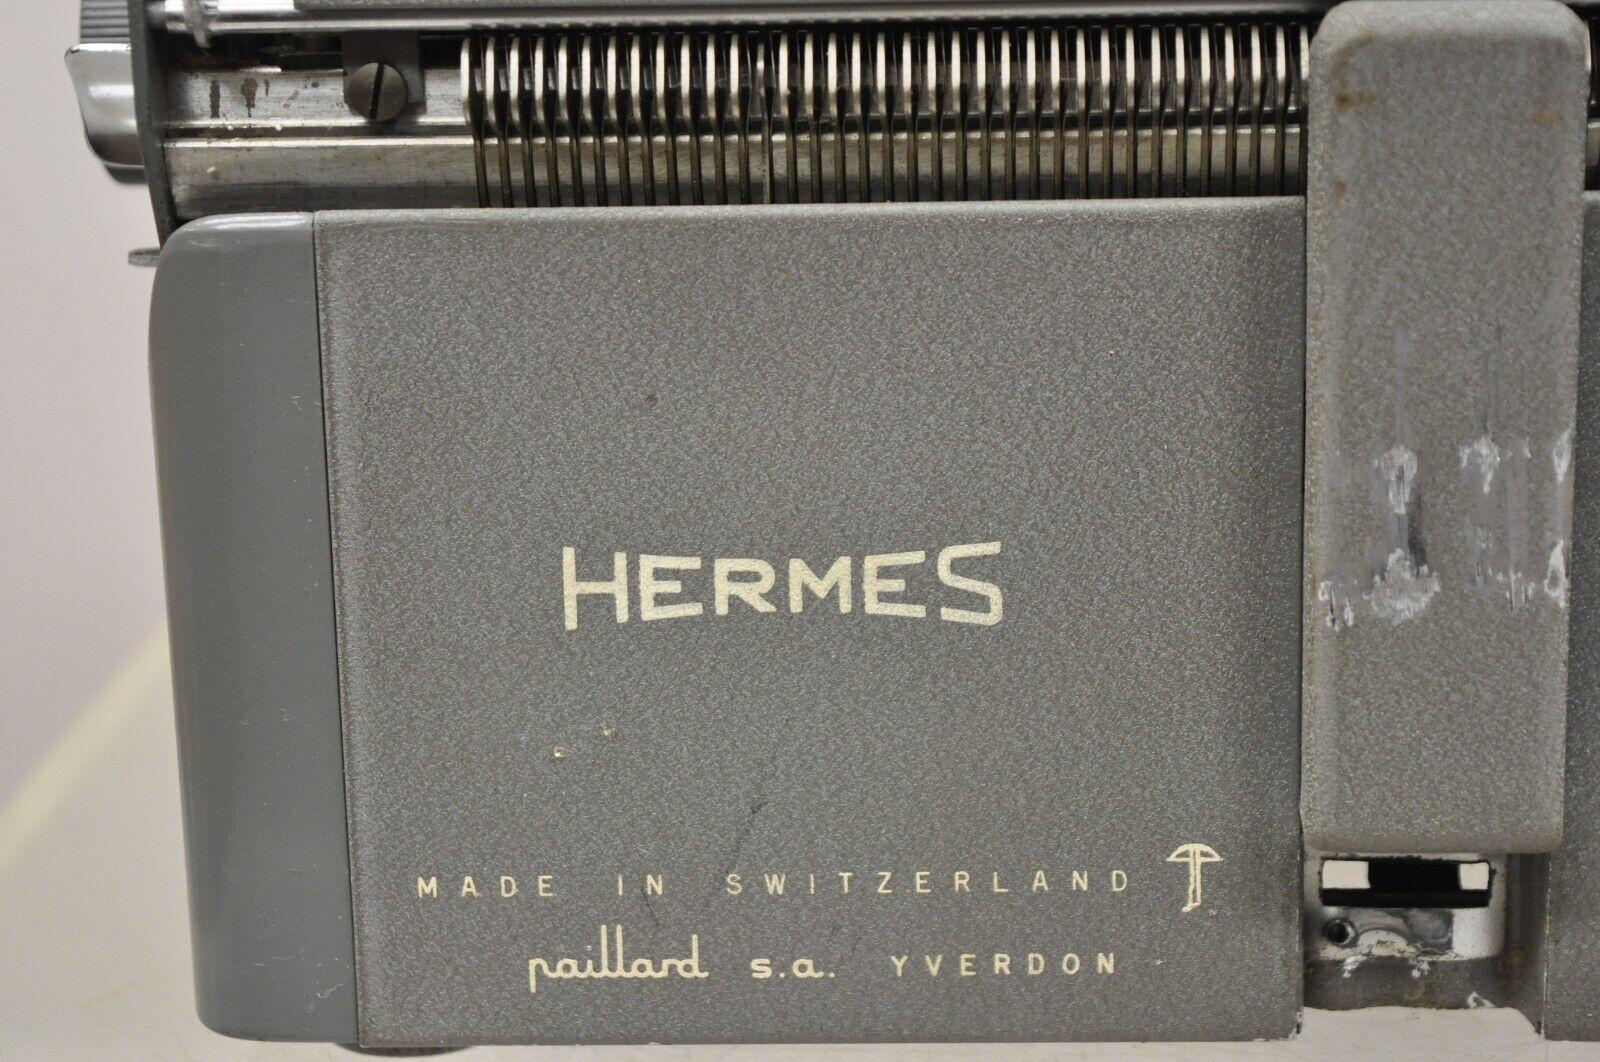 Vintage Hermes 2000 by Paillard Manual Typewriter with Green Carrying Case 6